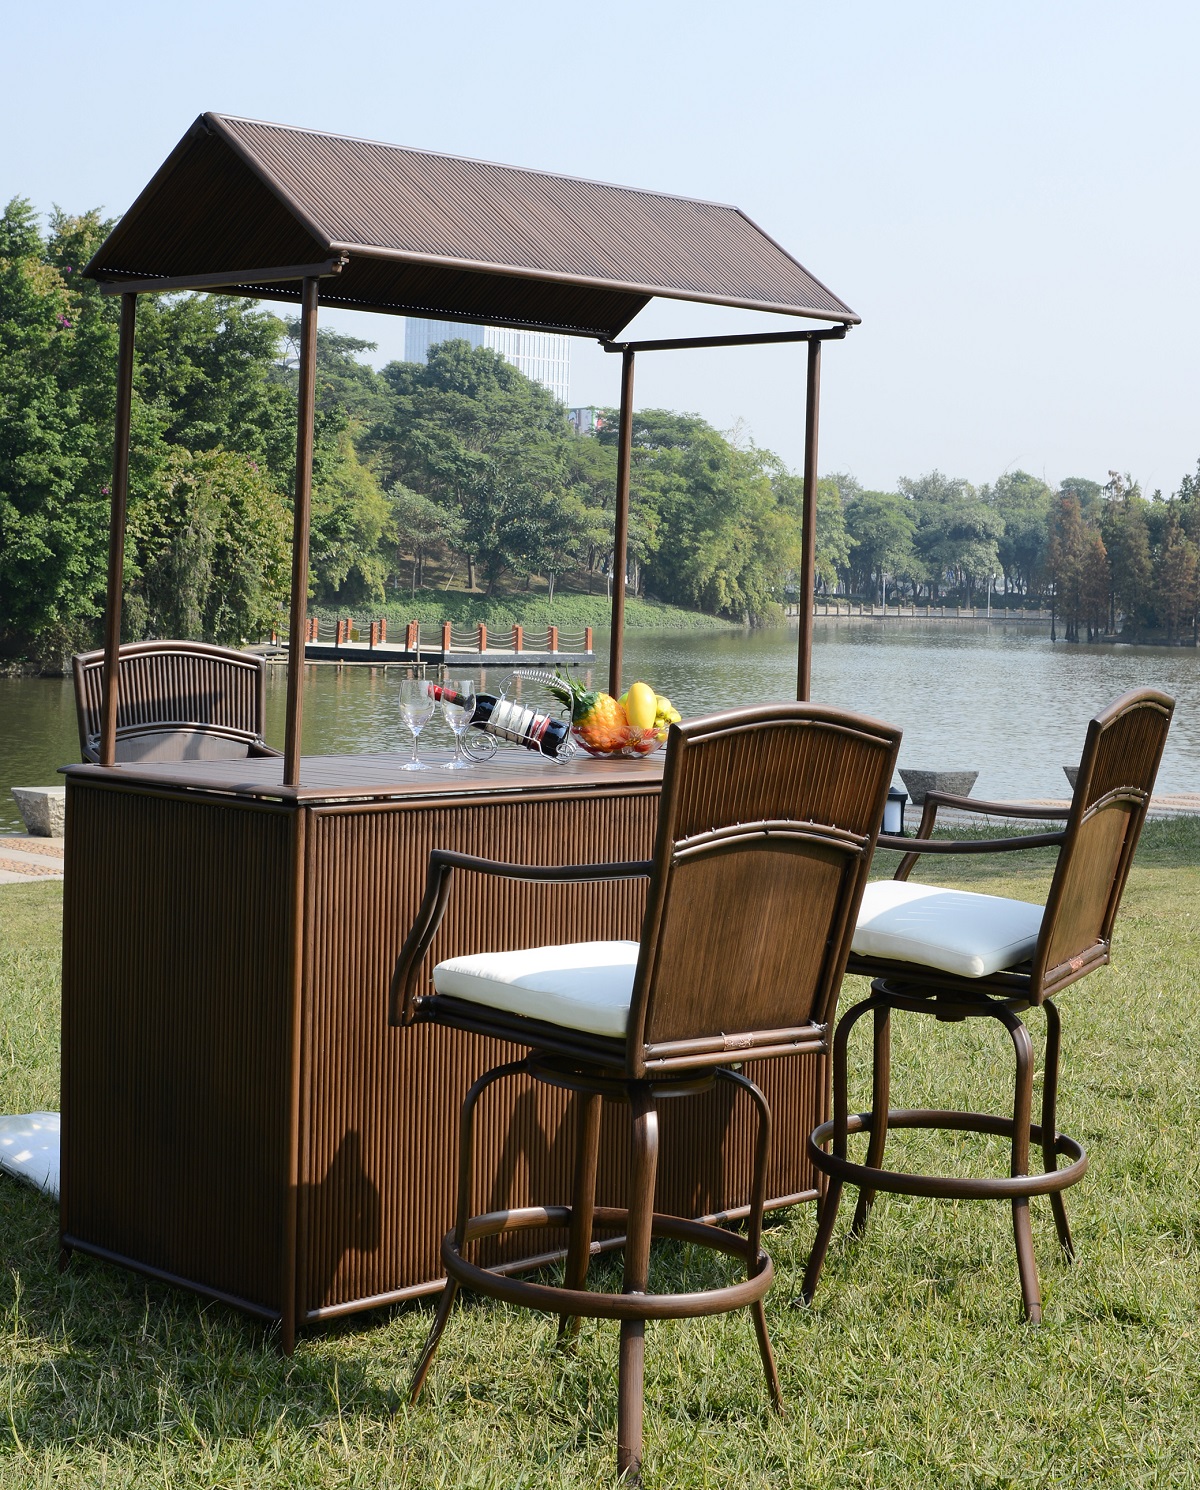 tikki bar and chairs - antonelli's furniture - melbourne, fl